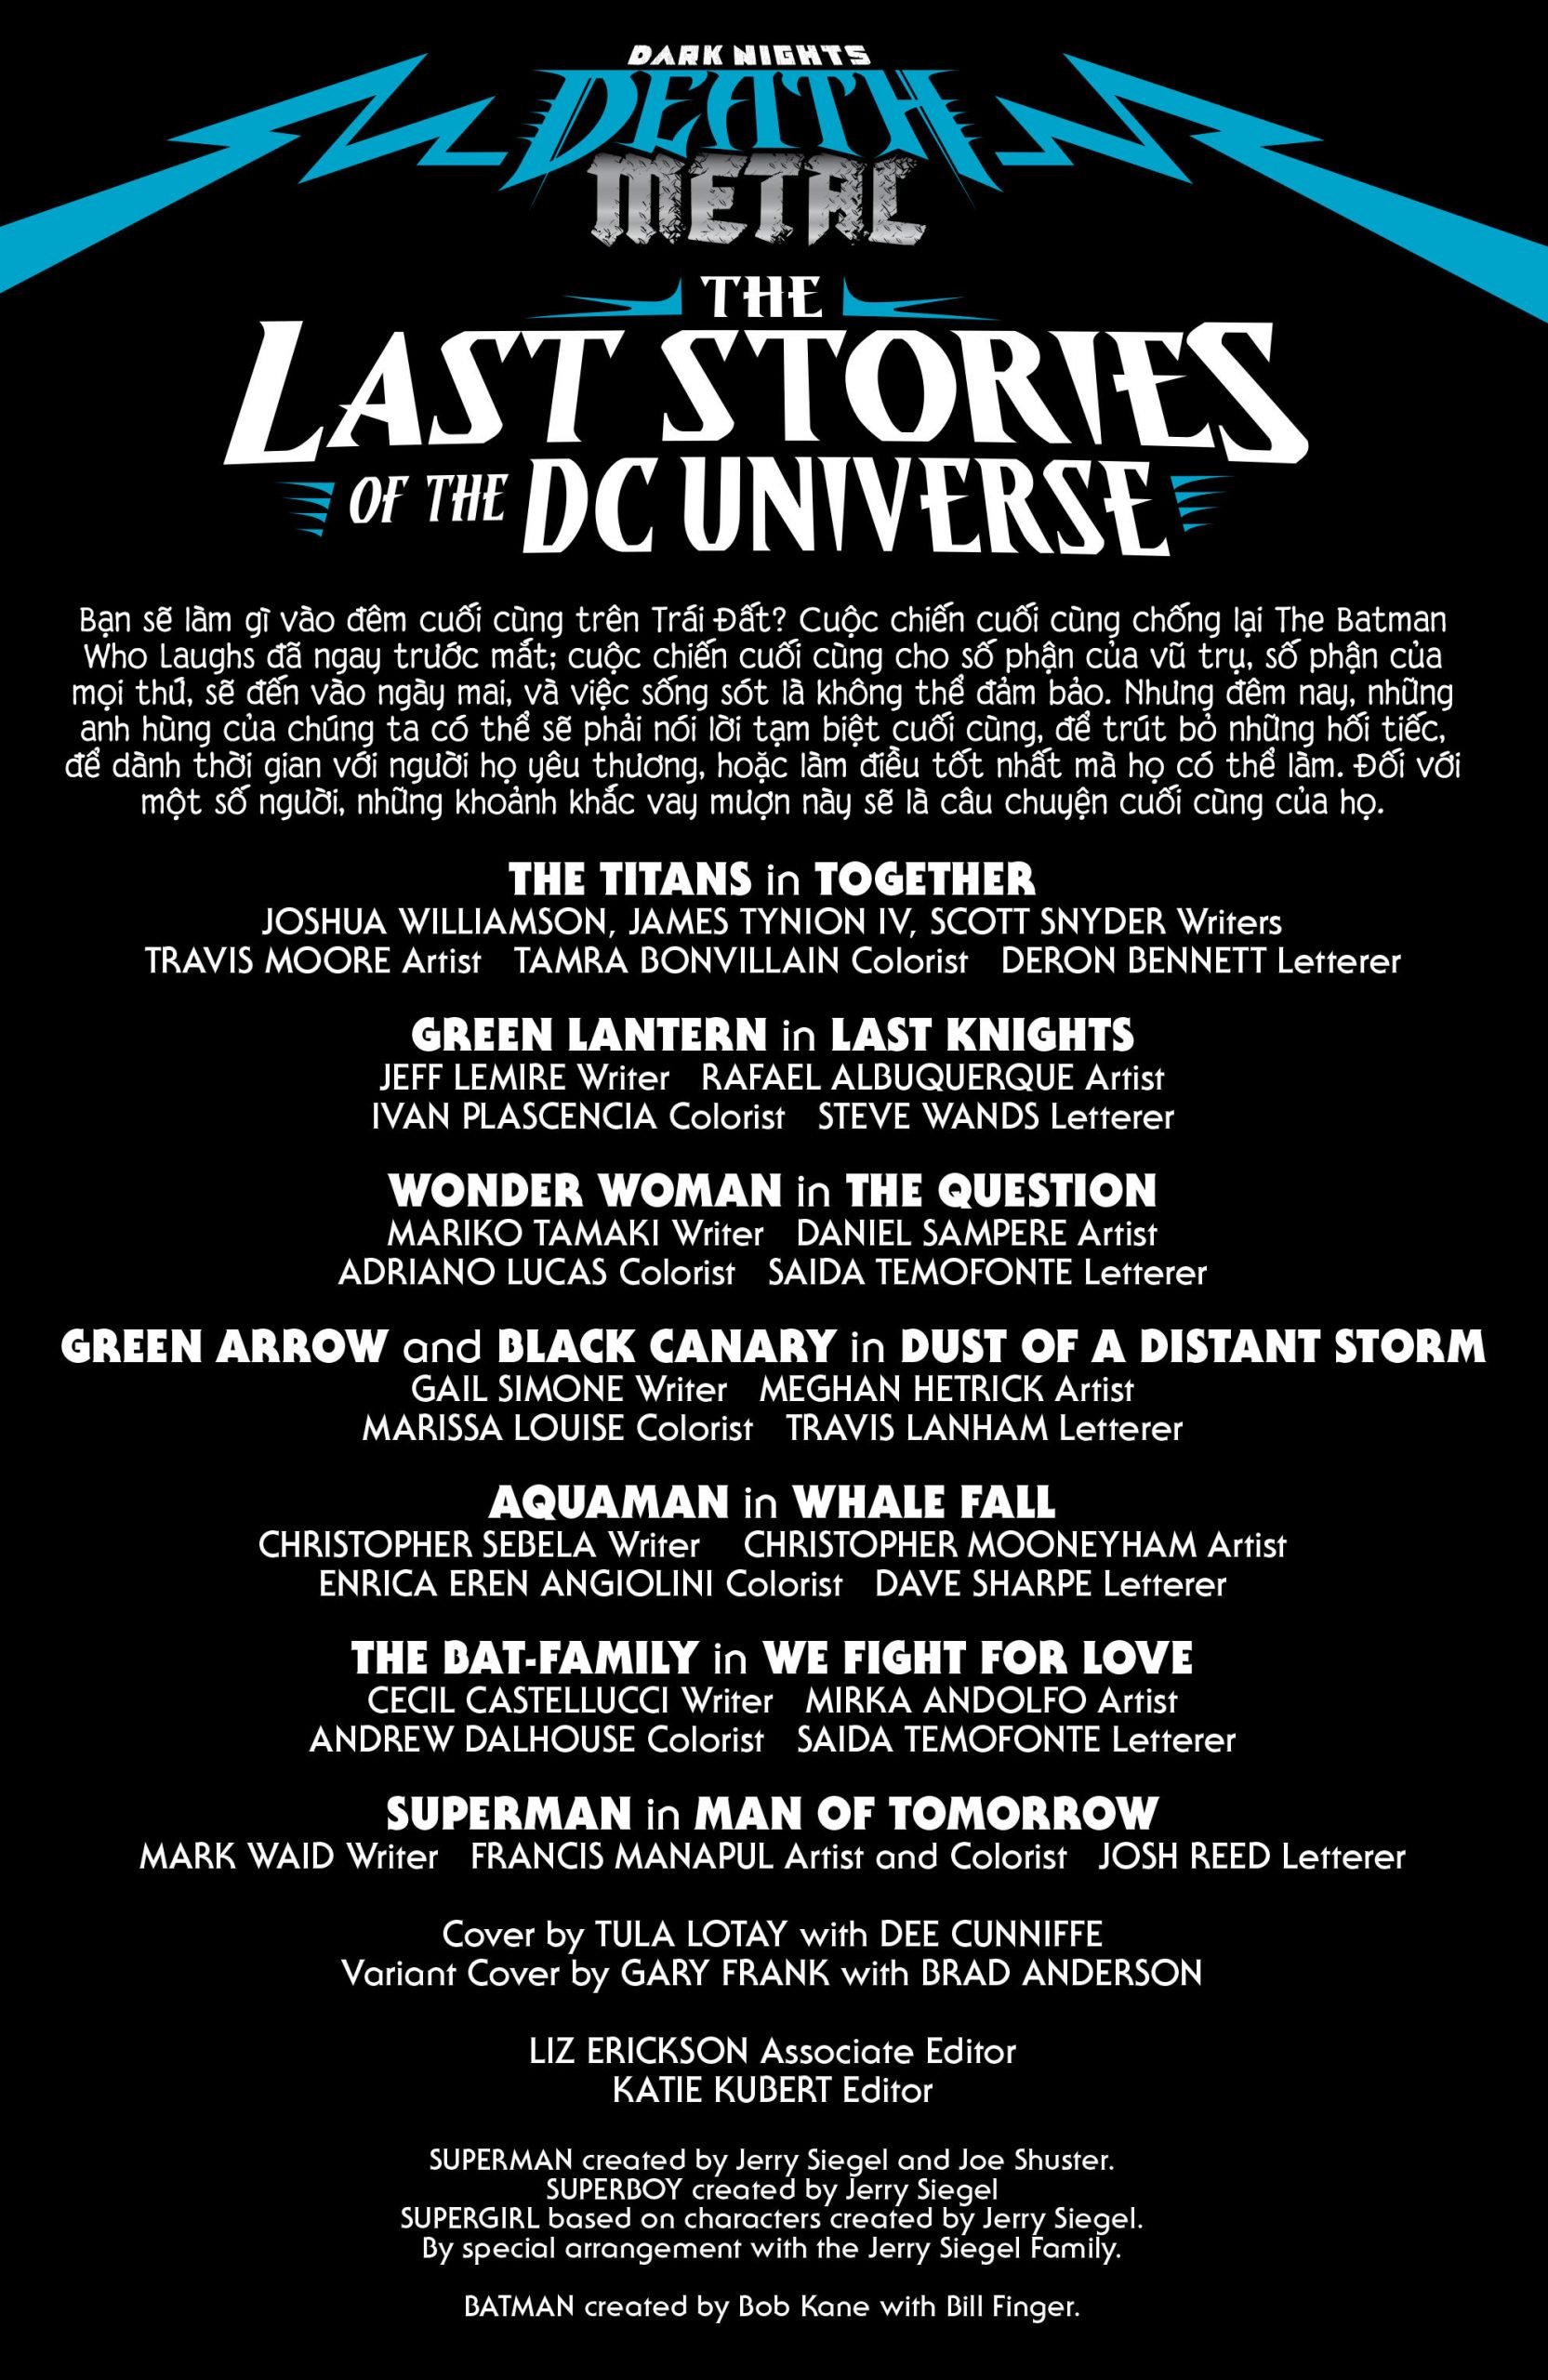 https://langgeek.net/wp-content/uploads/2021/10/Dark-Nights-Death-Metal-The-Last-Stories-of-the-DC-Universe-2020-001-002-scaled.jpg